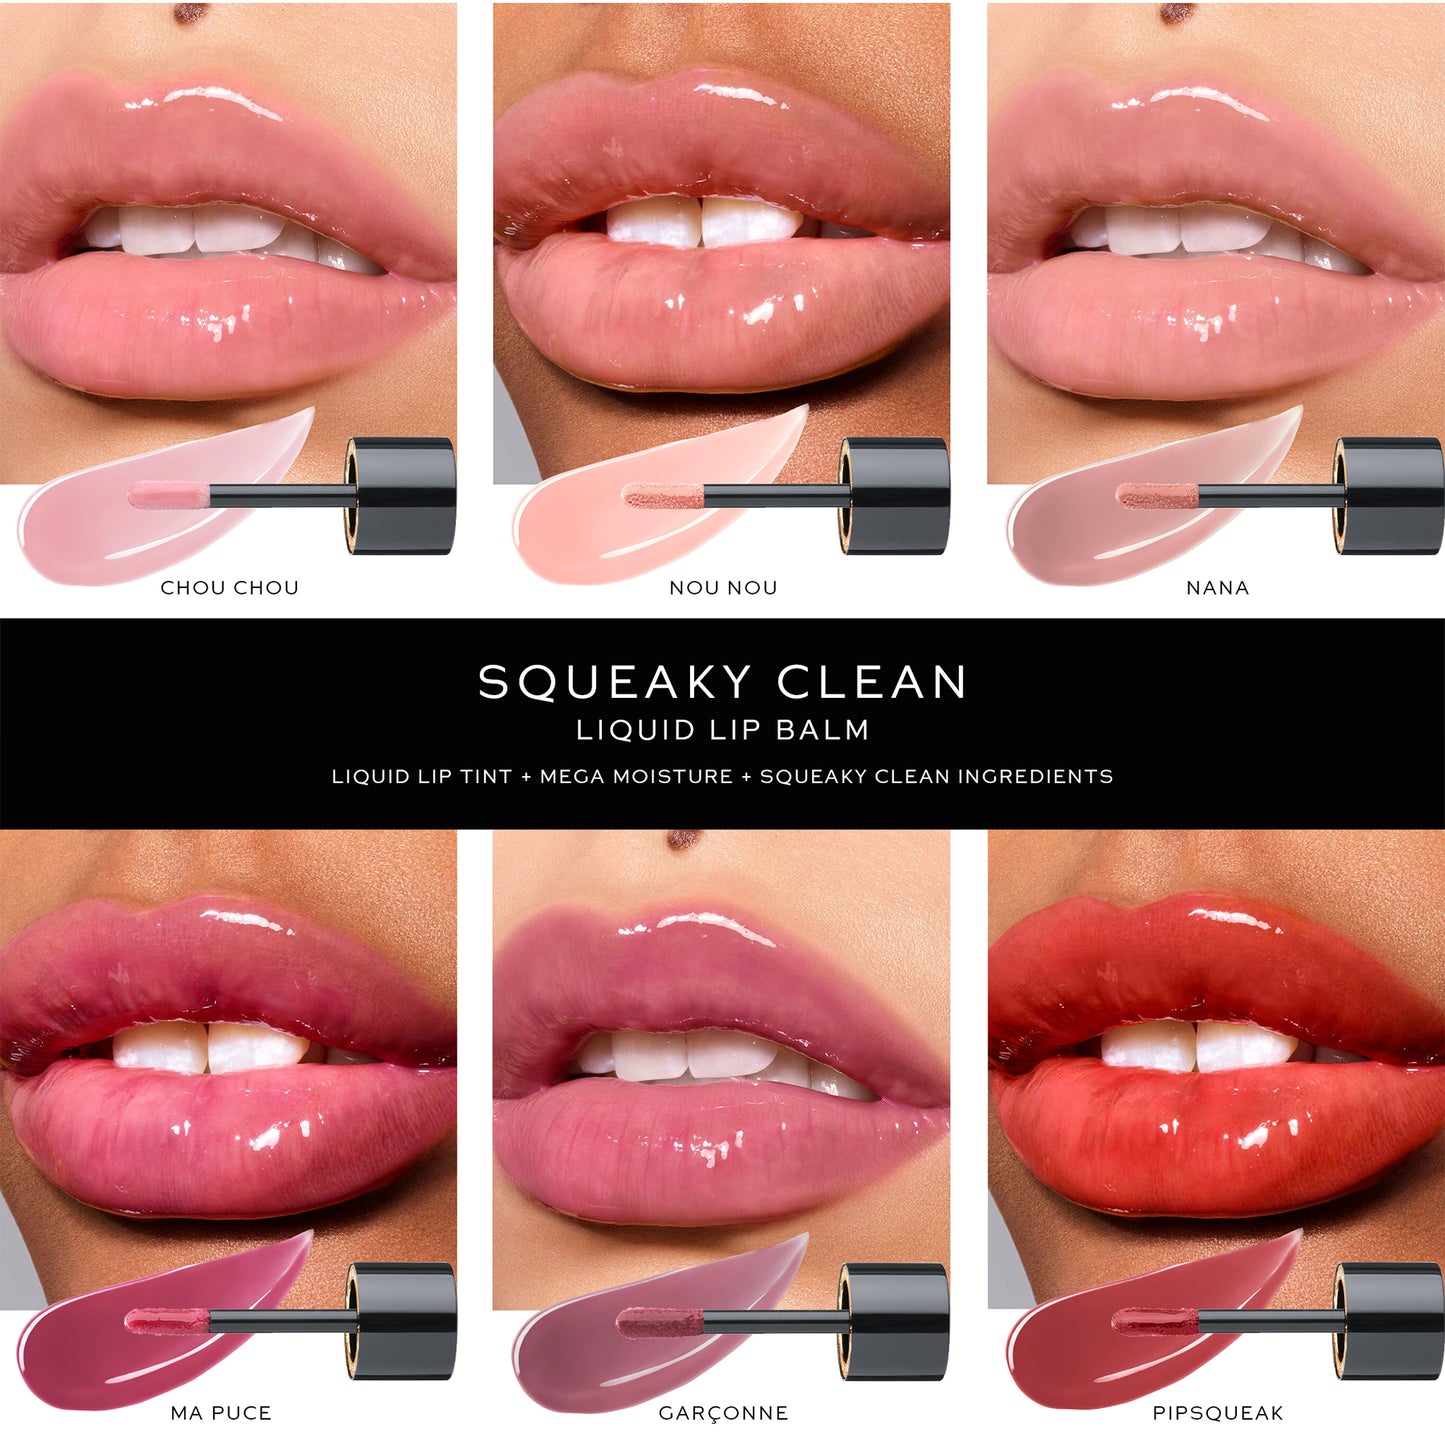 Squeaky Clean Lip Balm - Garconne